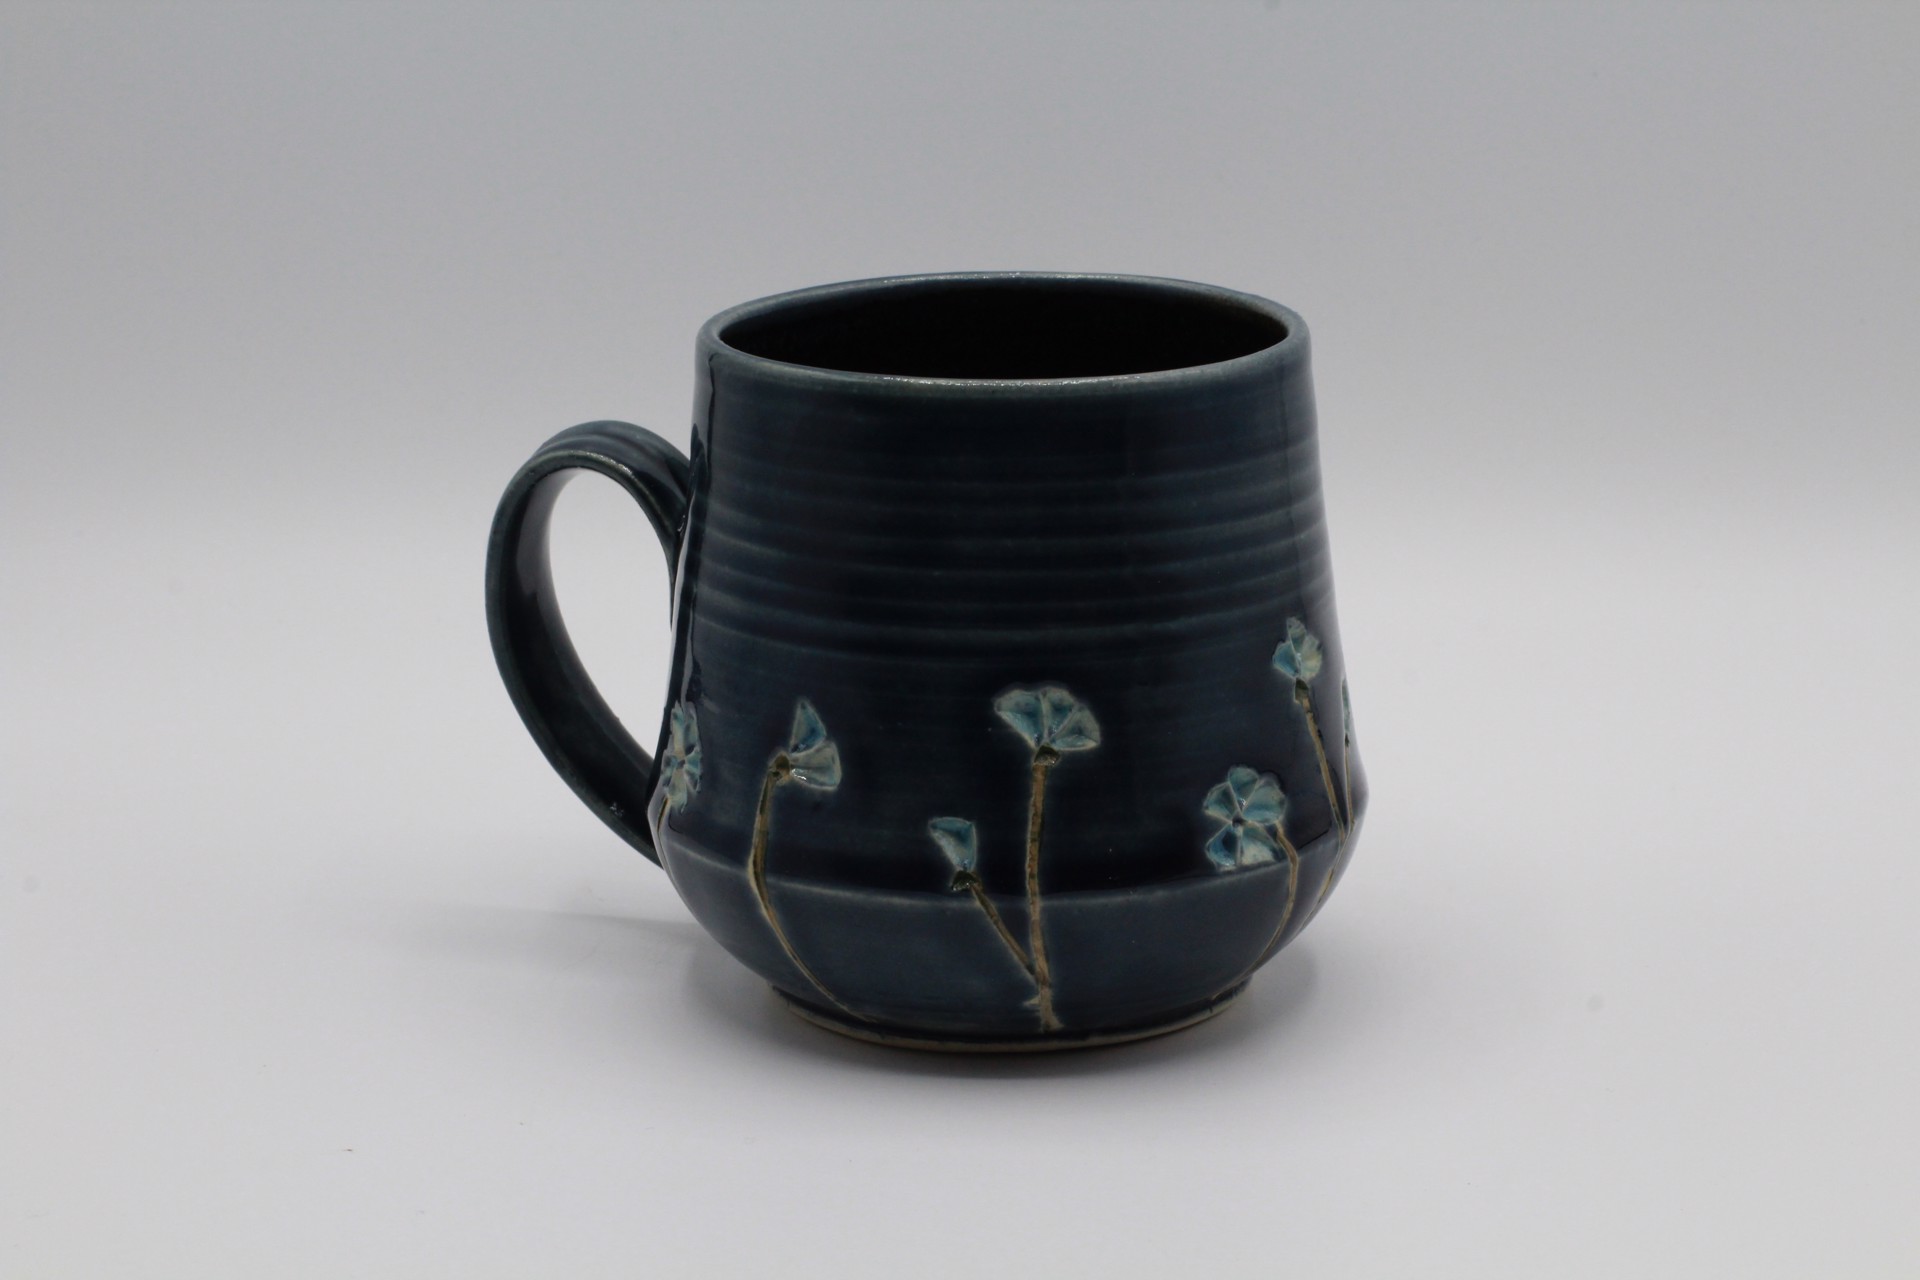 Flower Cup by Katie Redfield